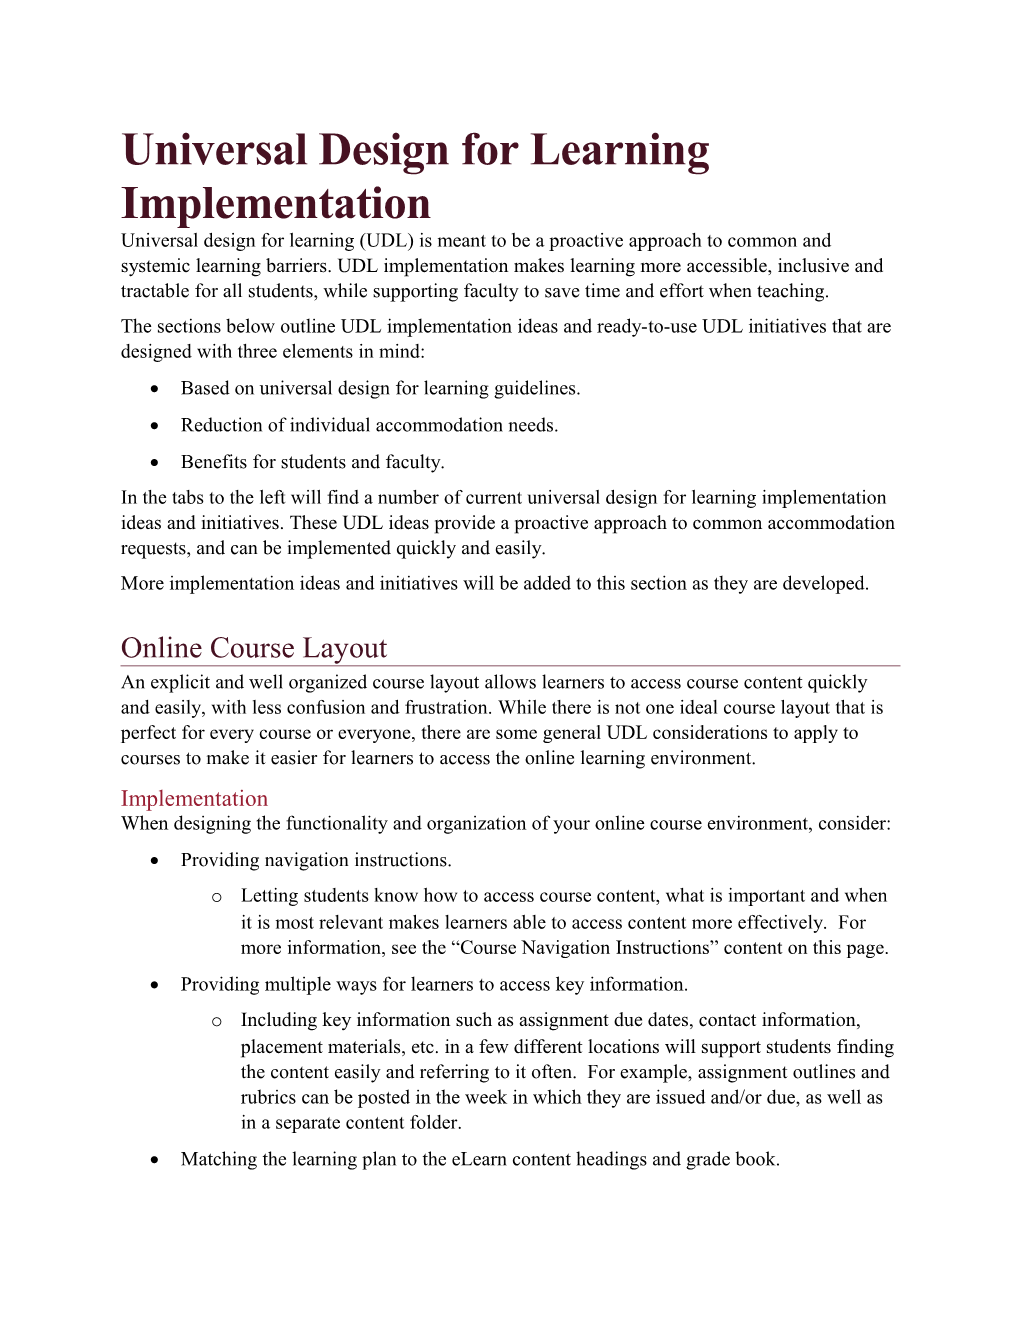 Universal Design for Learning Implementation